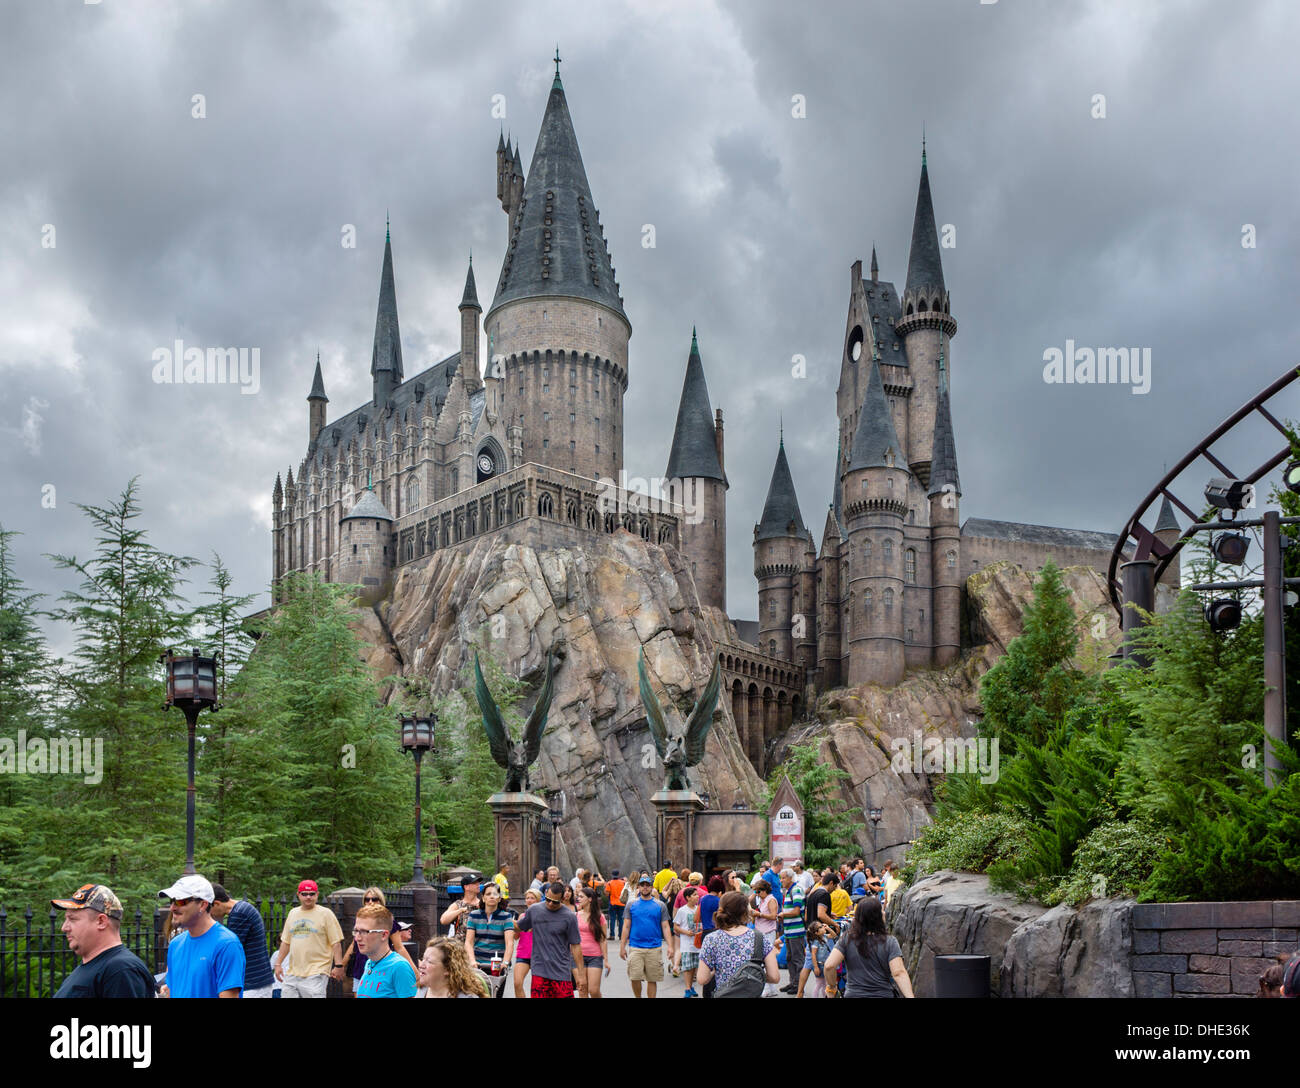 Hogwarts Castle Wizarding World Of Harry Potter Islands Of Adventure